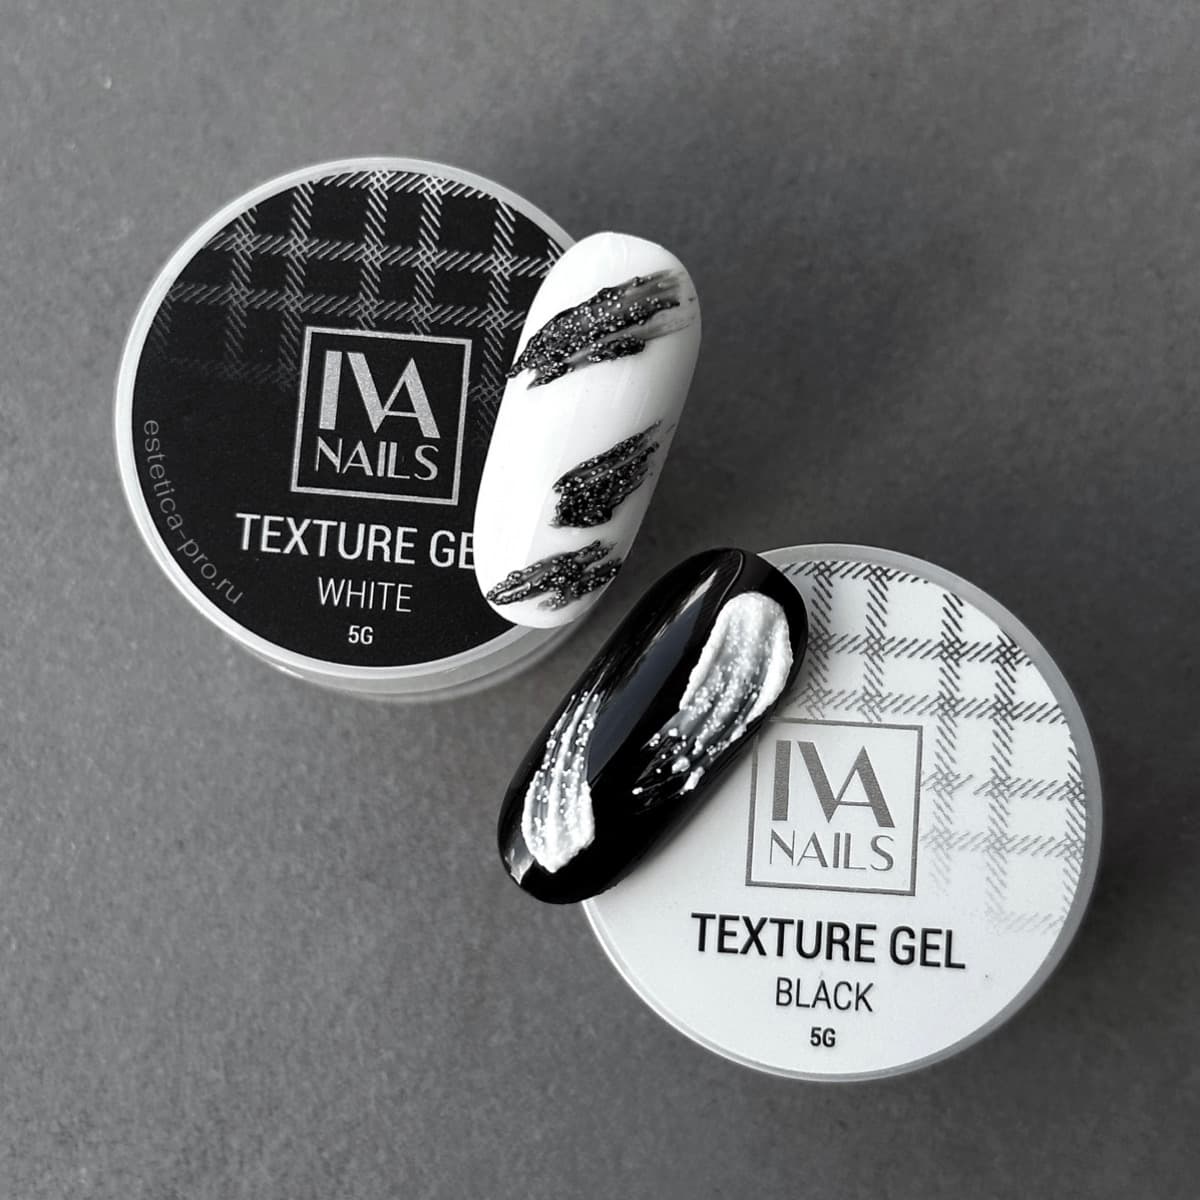 Гель-краска Texture Gel IVA Nails Black, 5 гр.